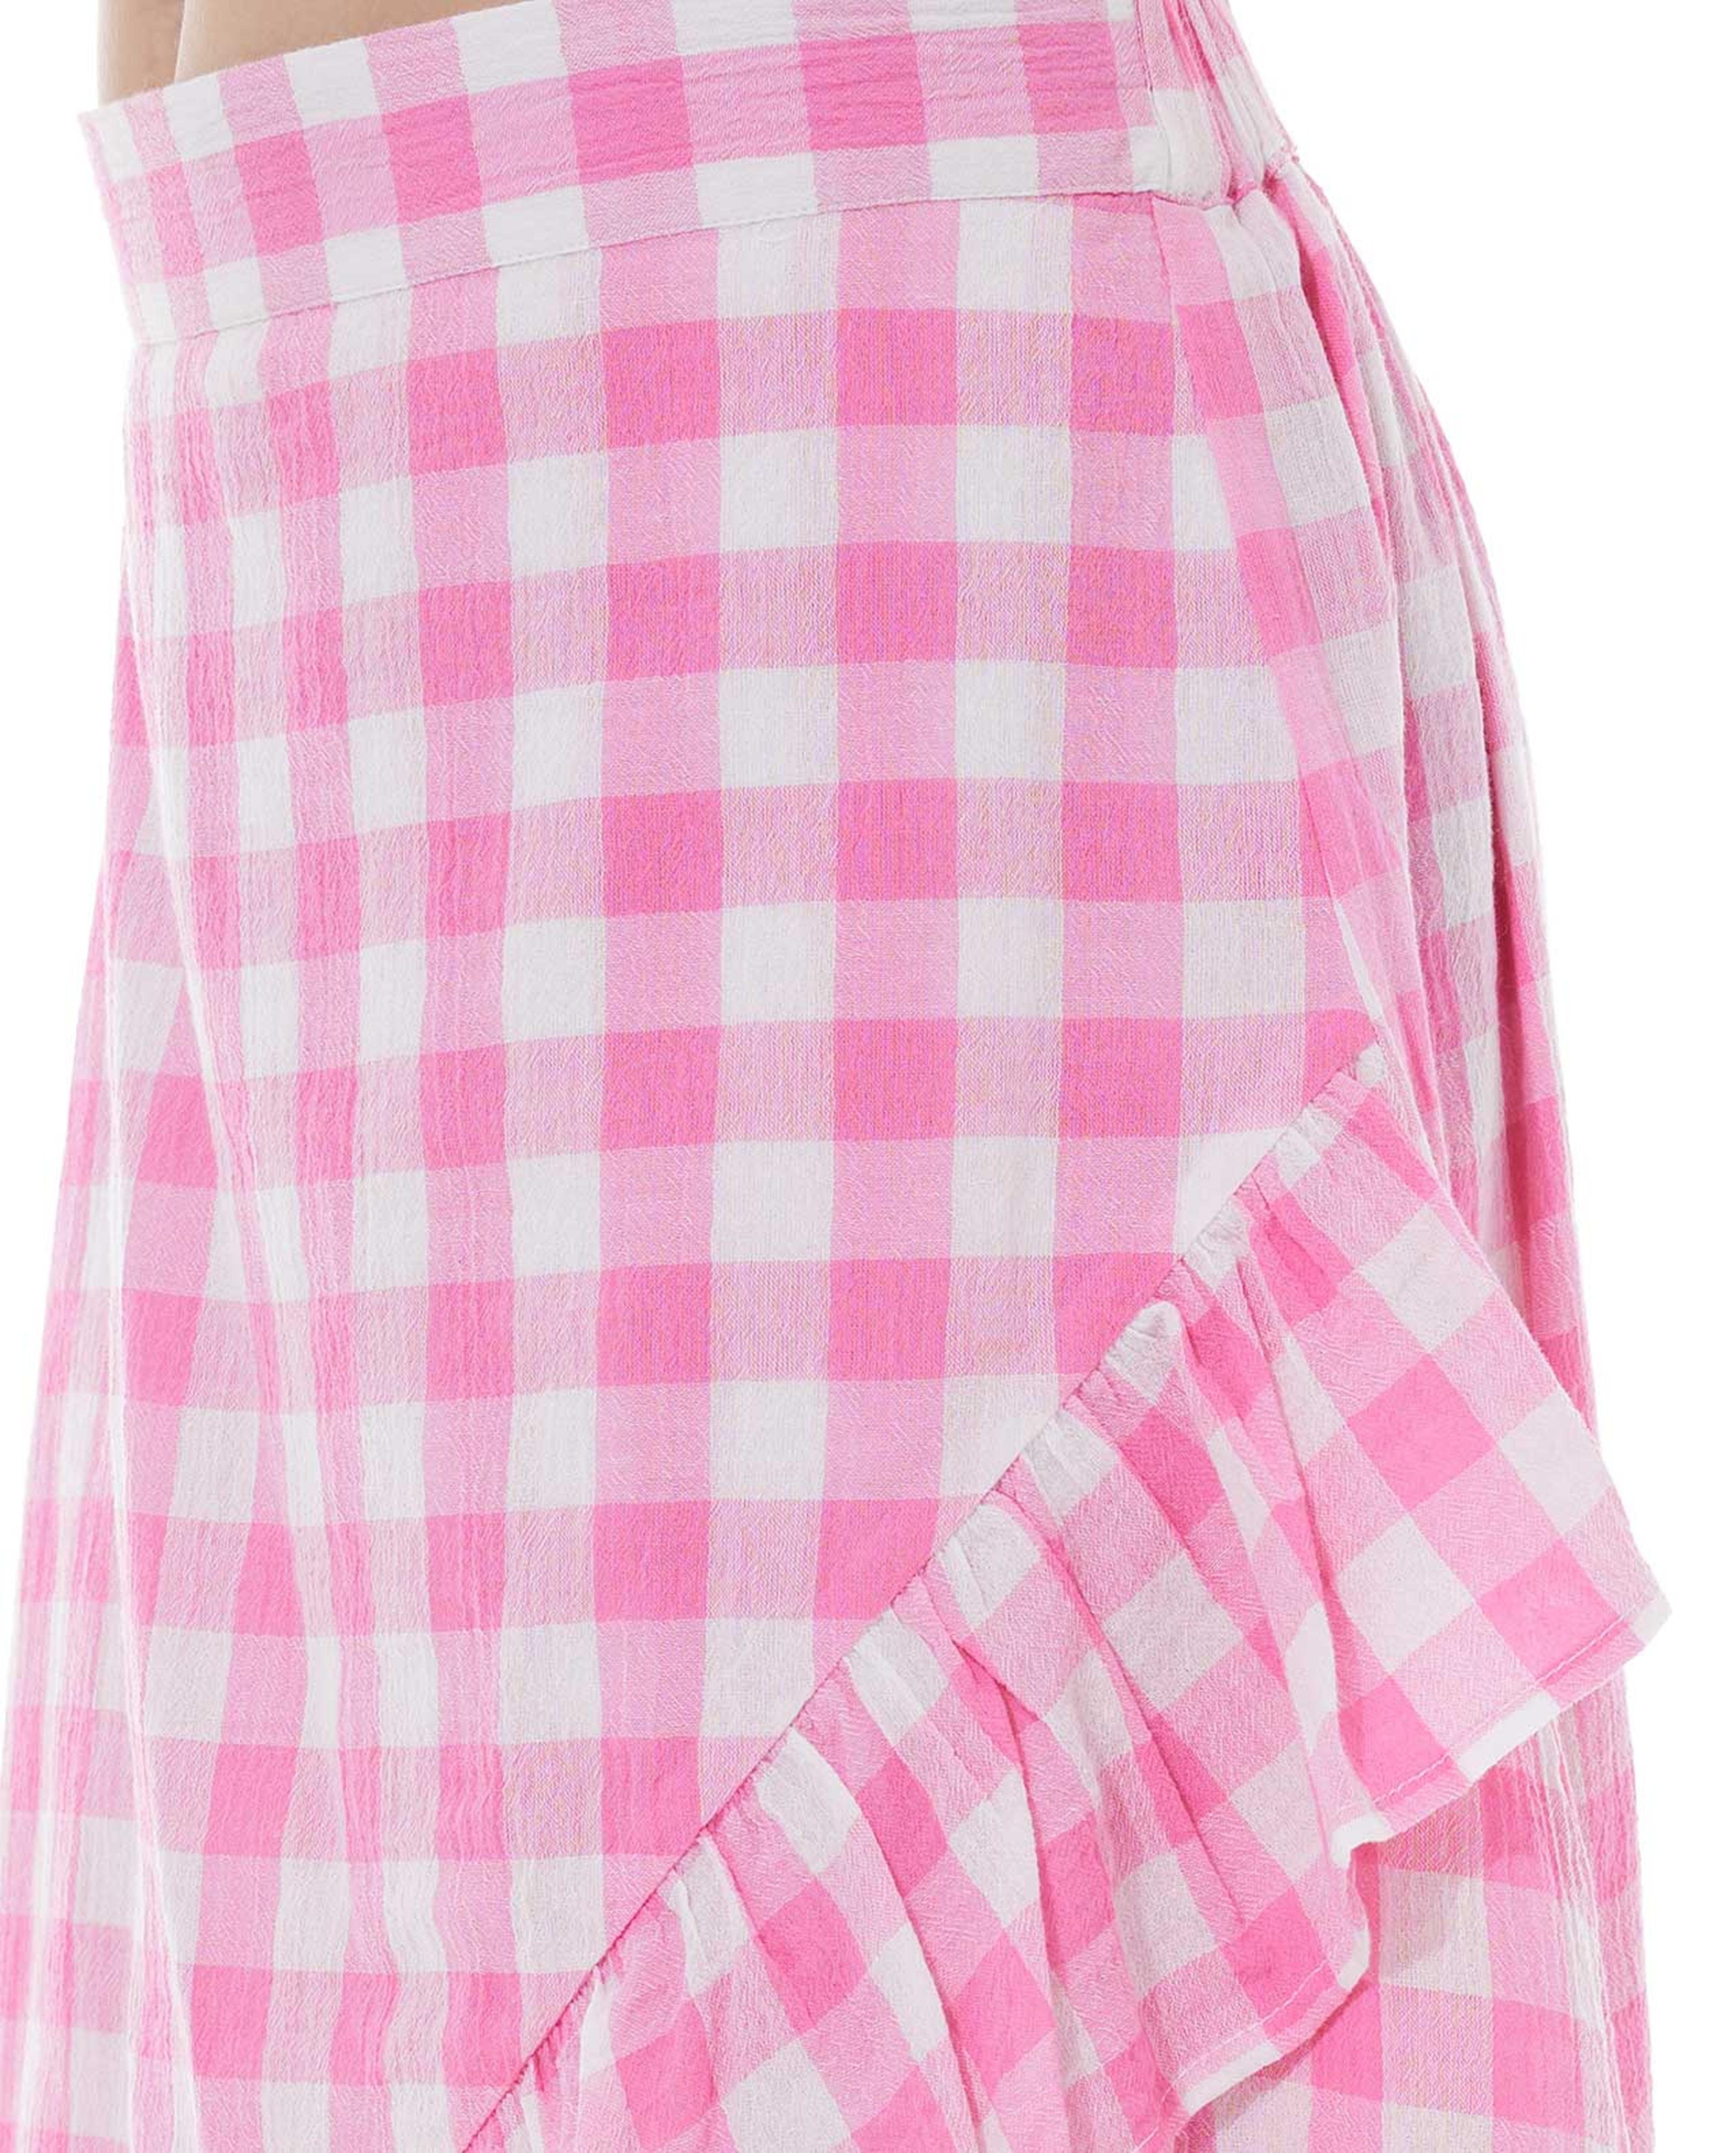 Checkered Skirt with Elastic Waist